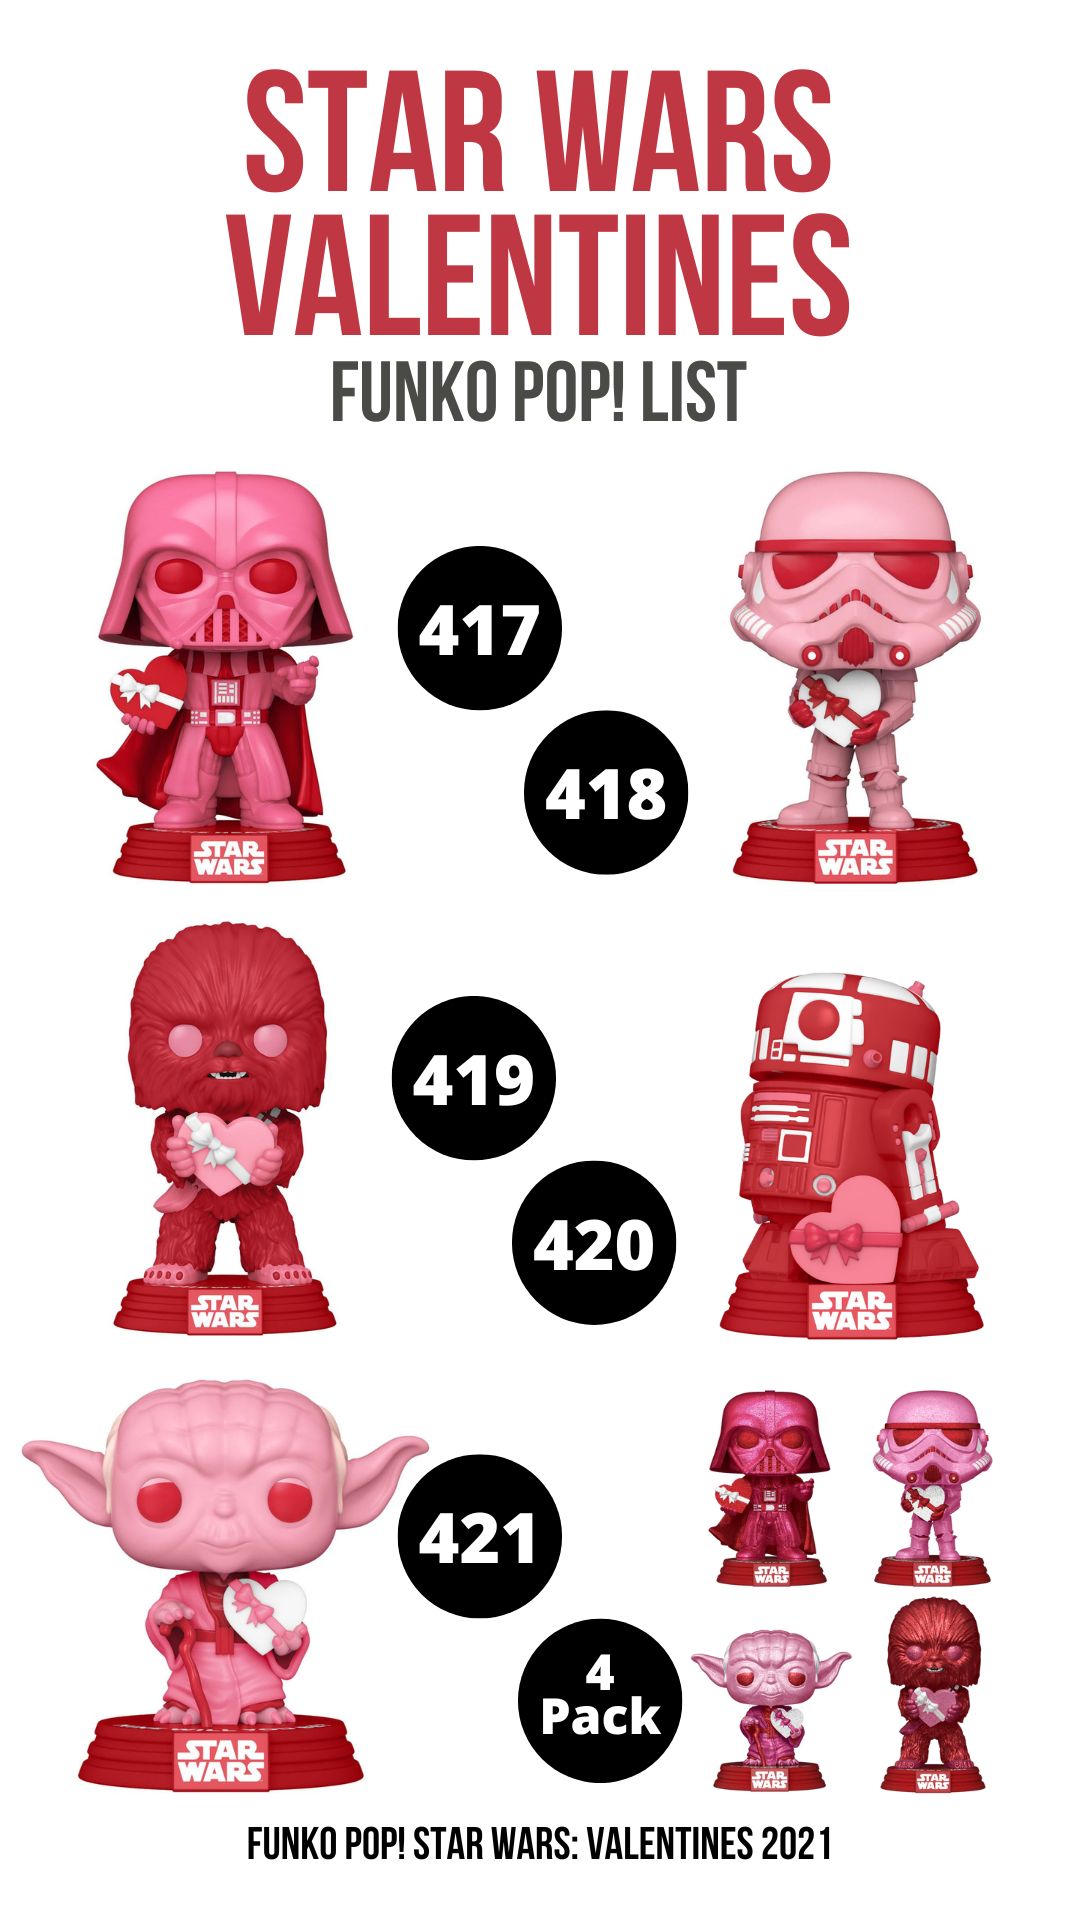 Star Wars Funko Pop Valentines List of Figures 2021